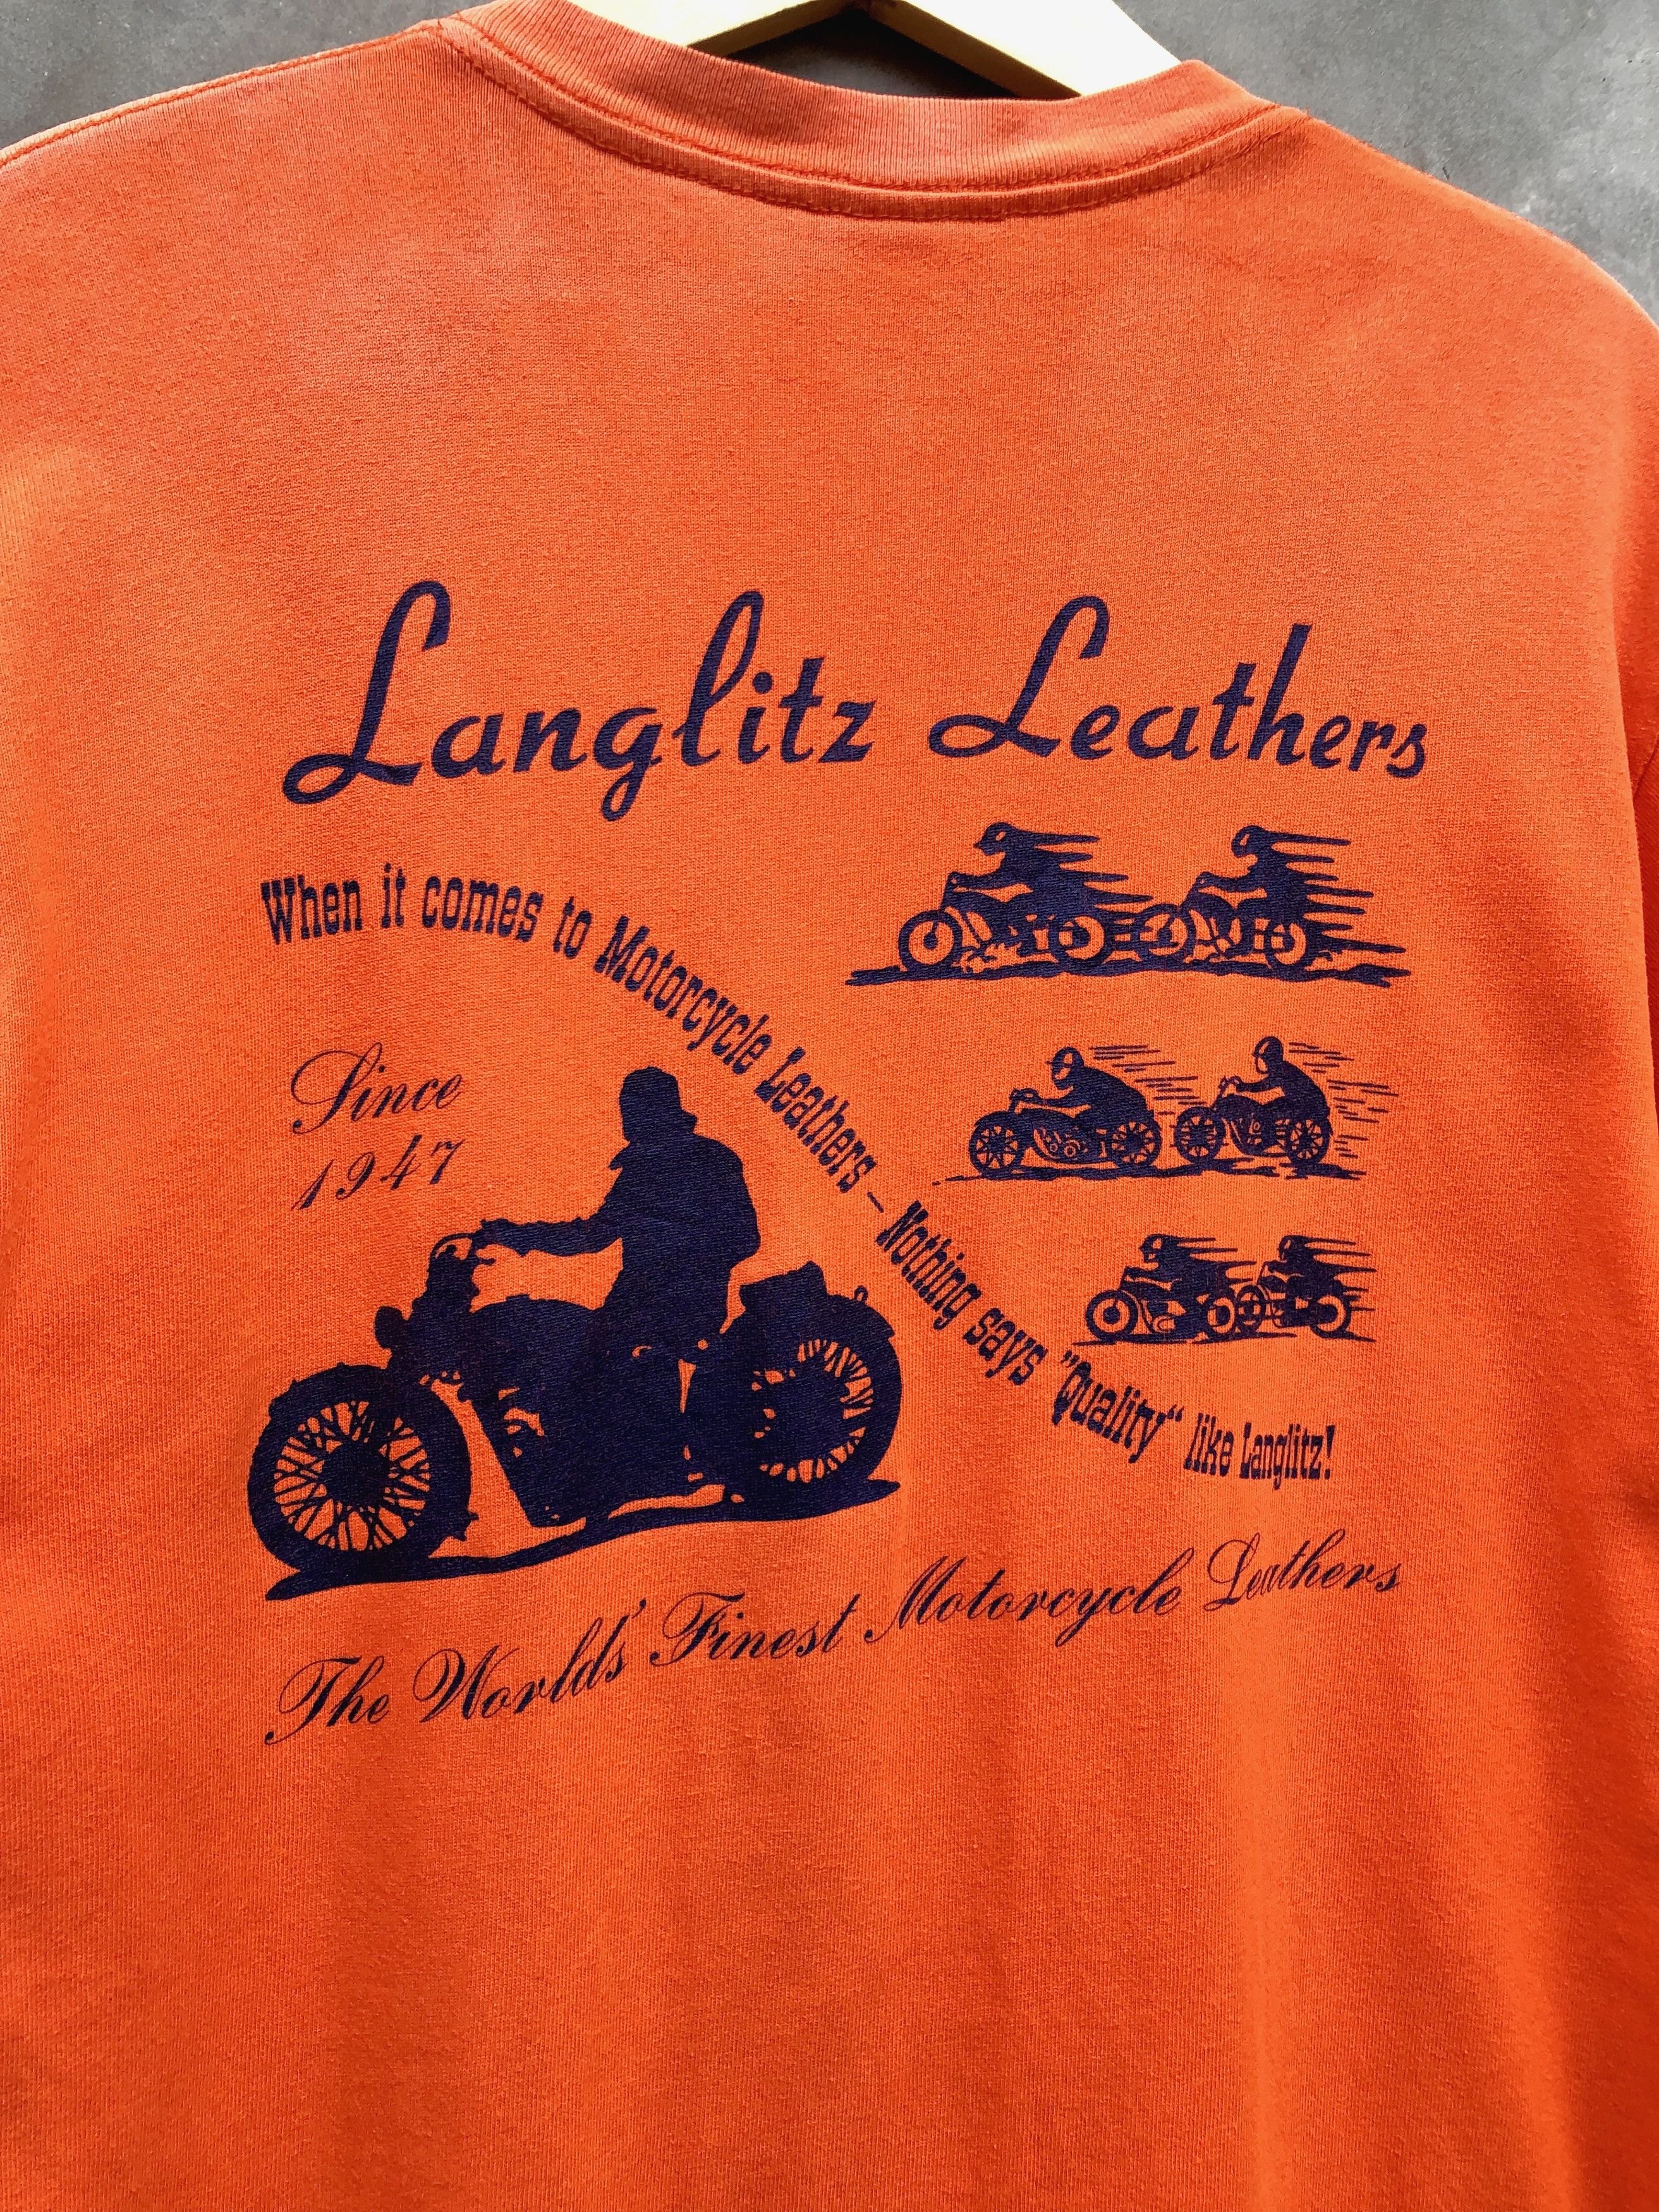 Vintage Langlitz tshirt Size US M / EU 48-50 / 2 - 5 Thumbnail